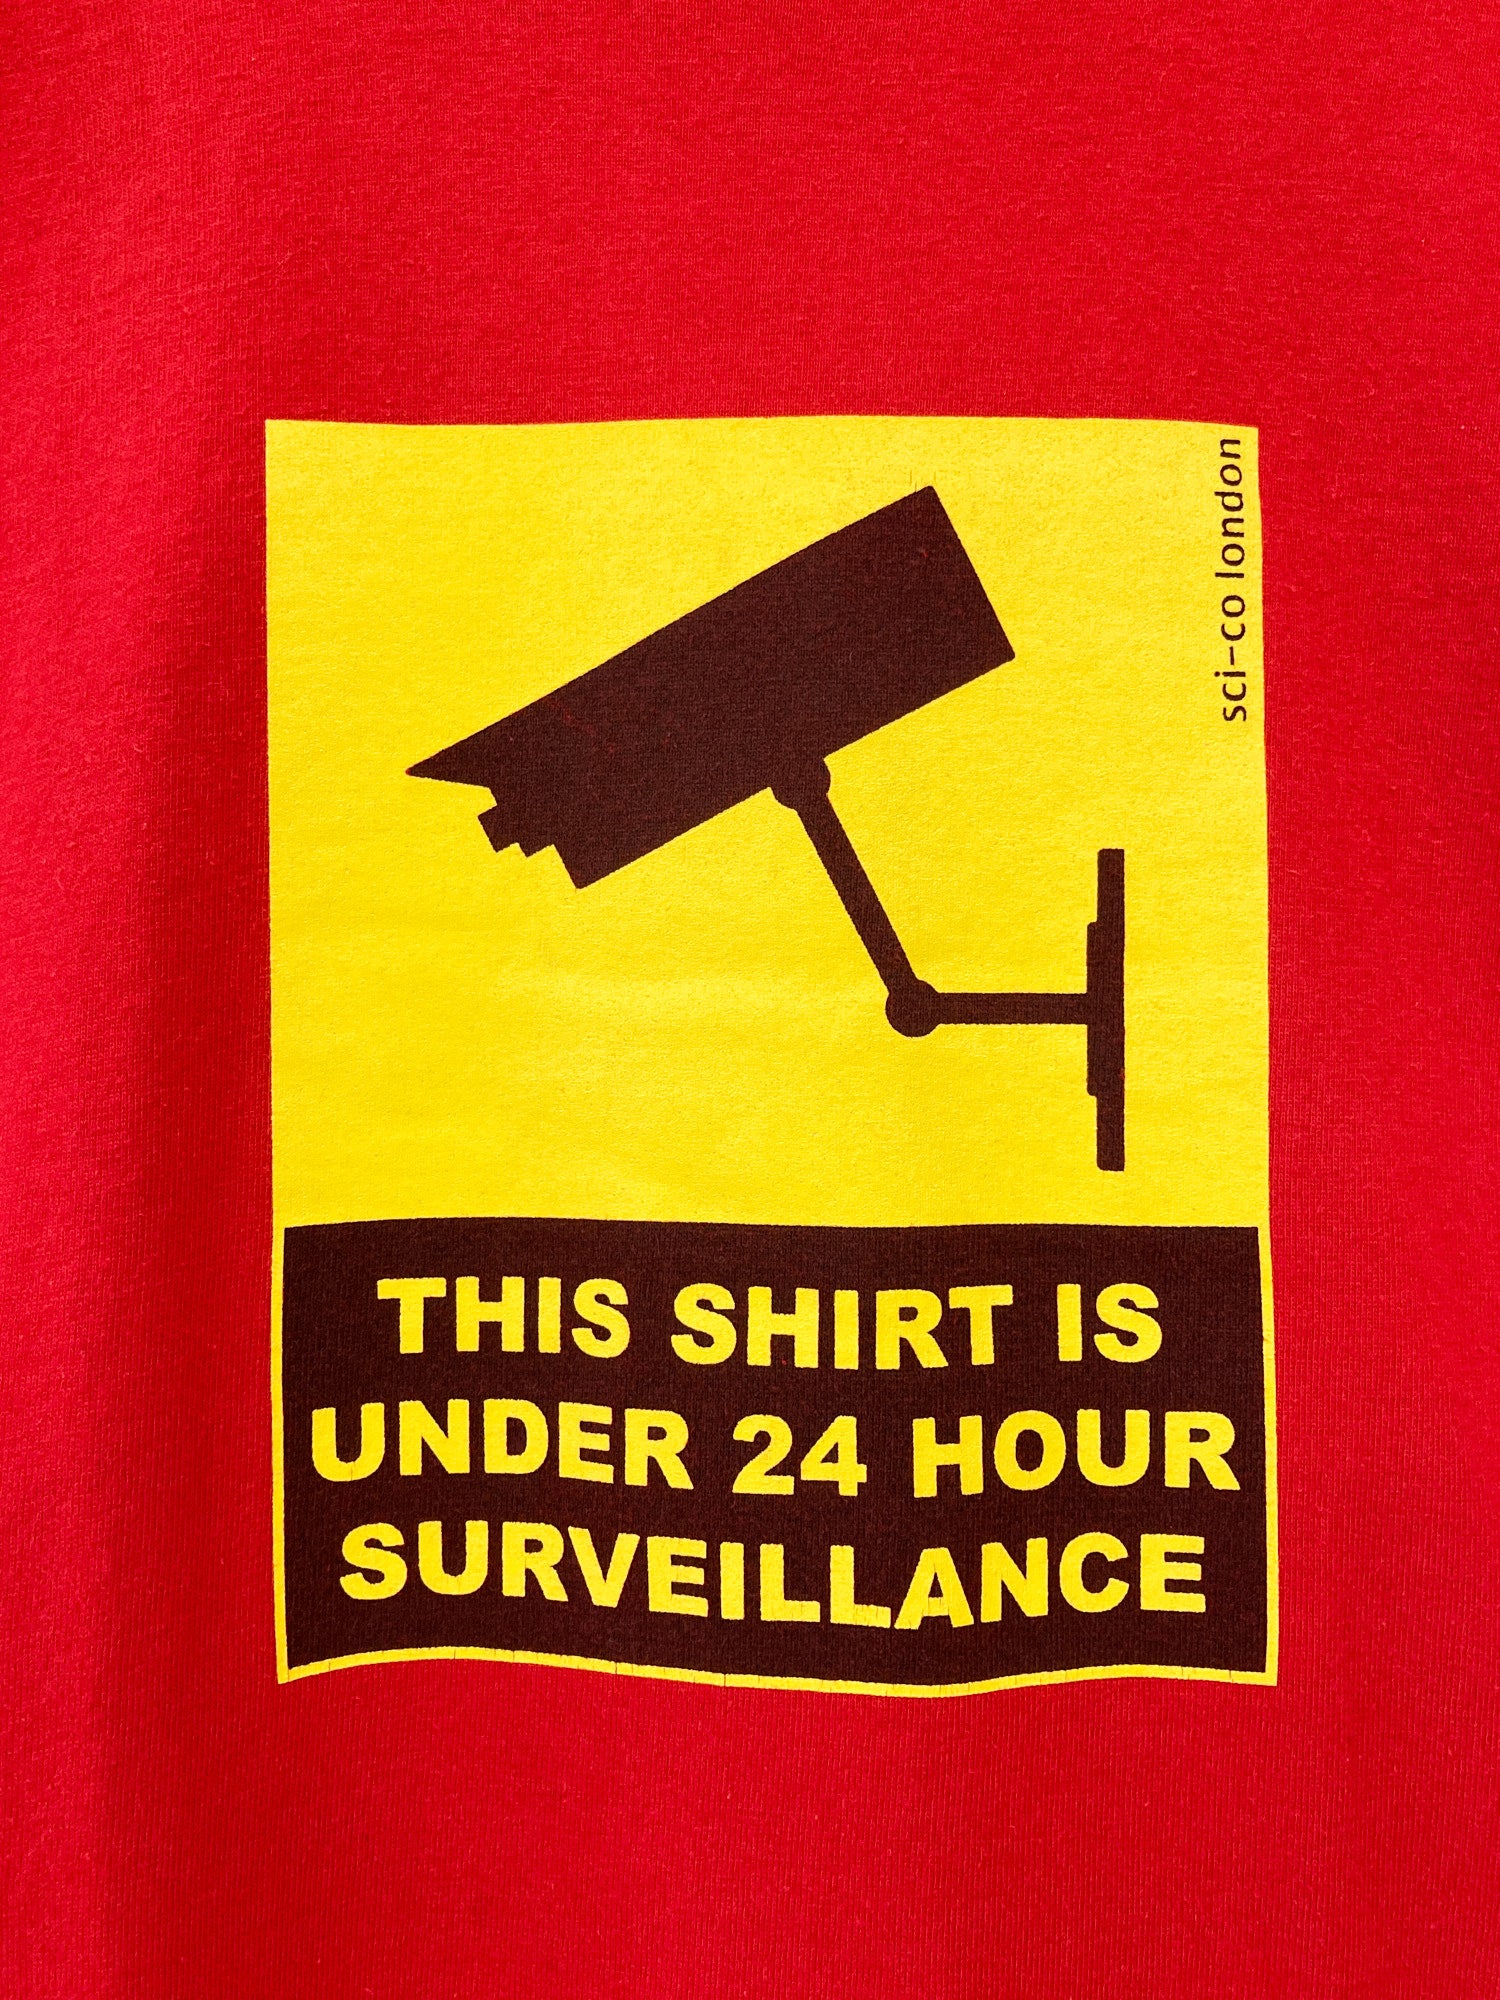 Science London 2001 red 'shirt under 24 hour surveillance' slogan t-shirt - S